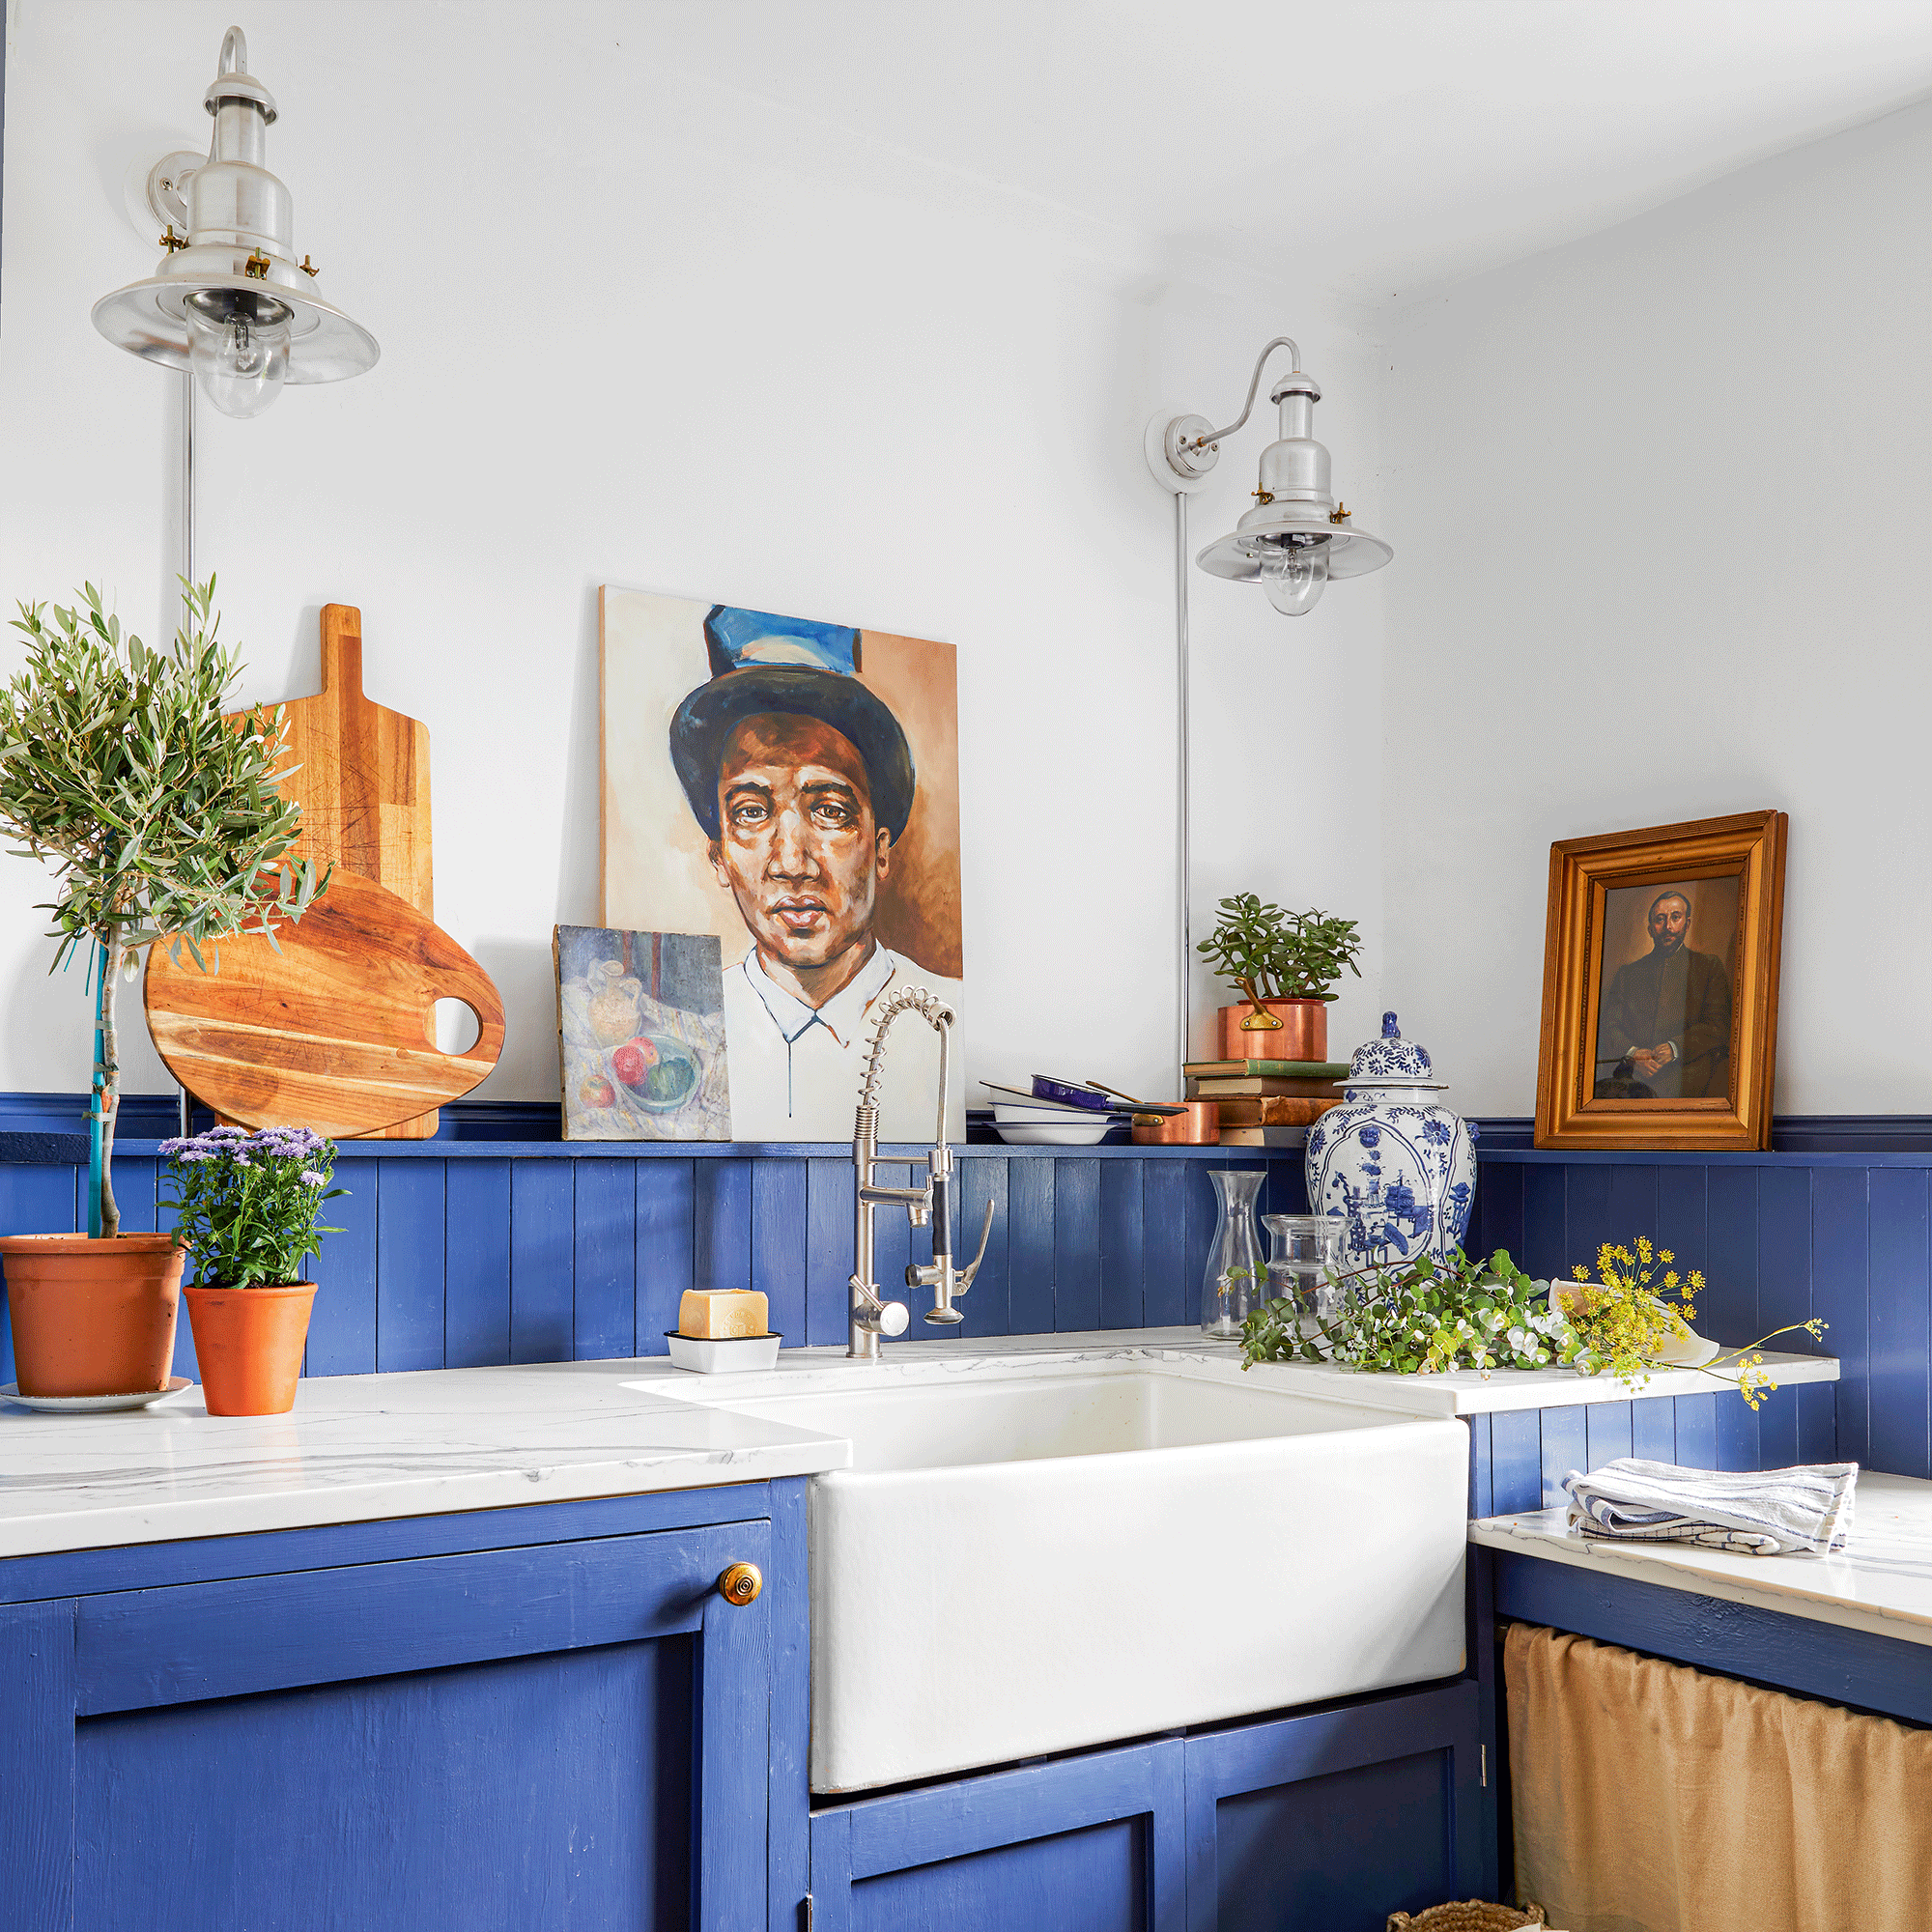 Cobalt blue cupboards and splashback with sink